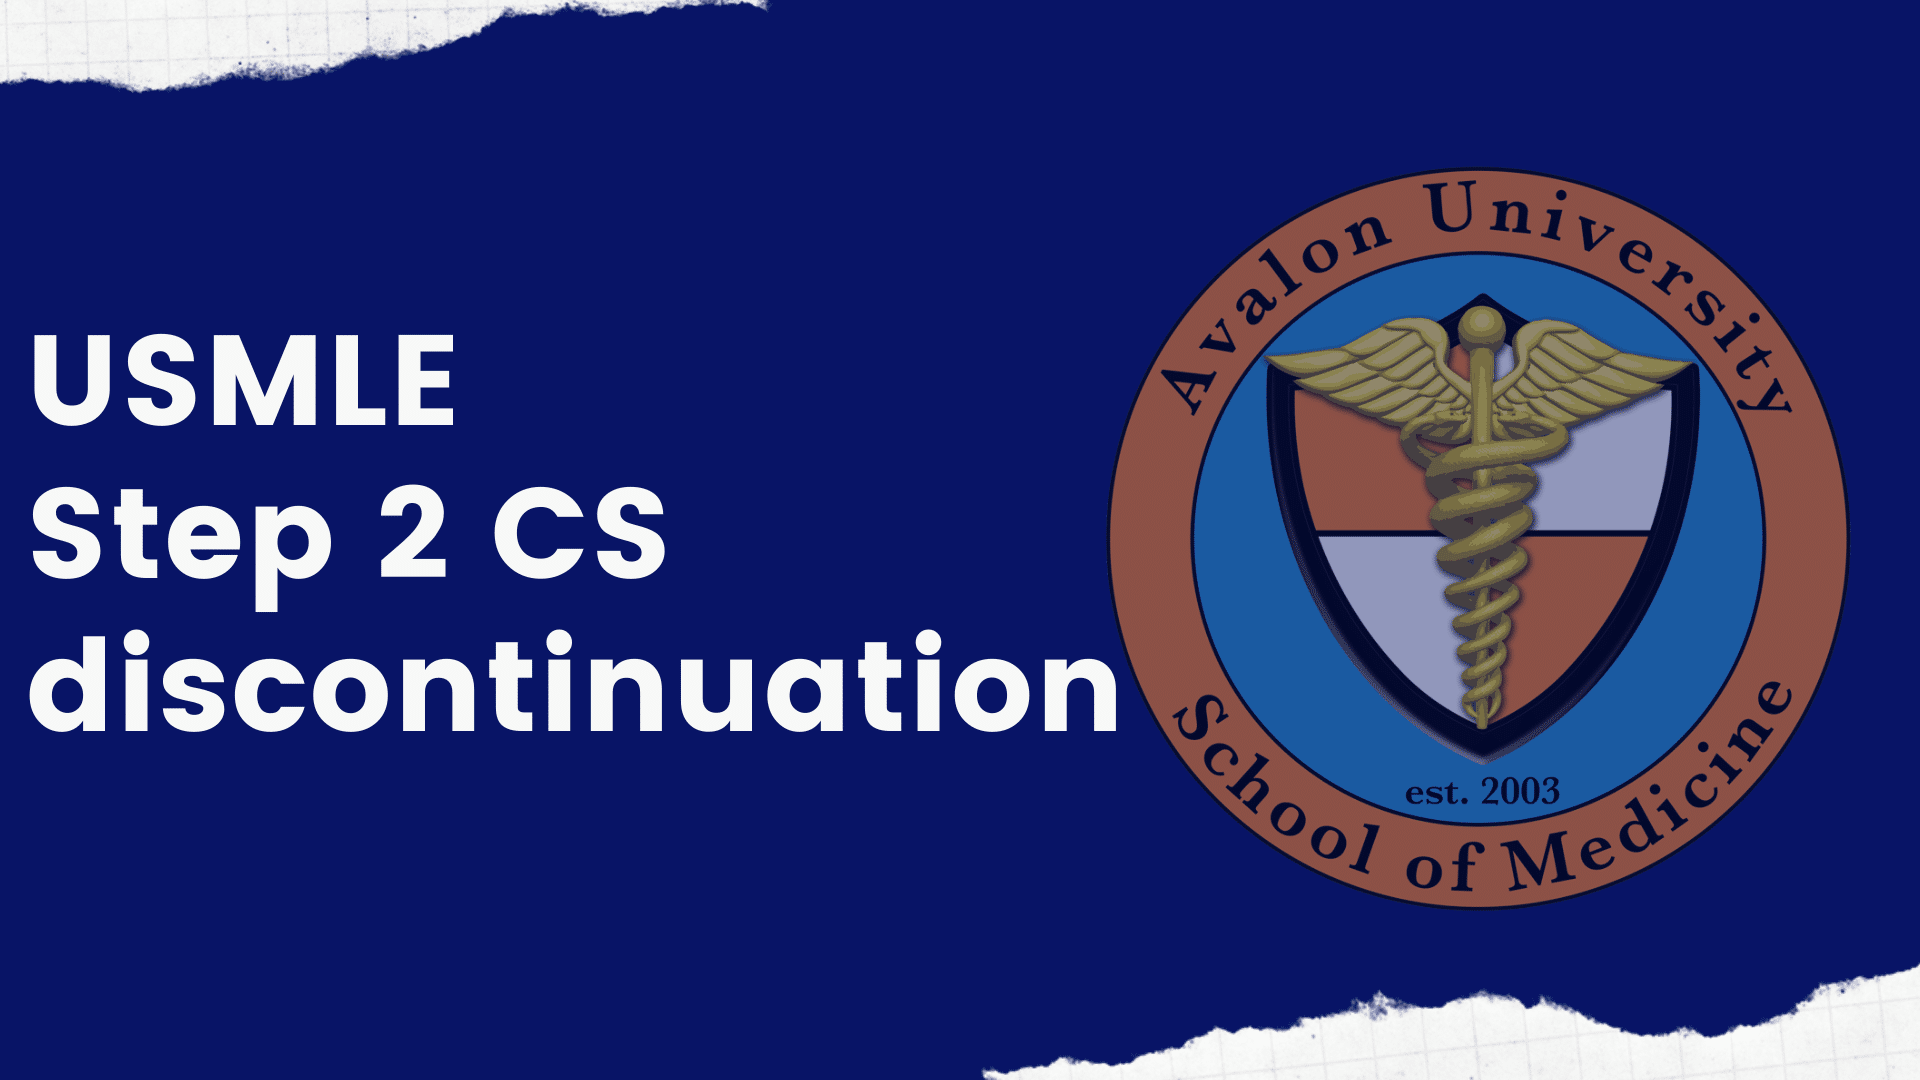 USMLE-Step-2-CS-discontinuation-Avalon-University